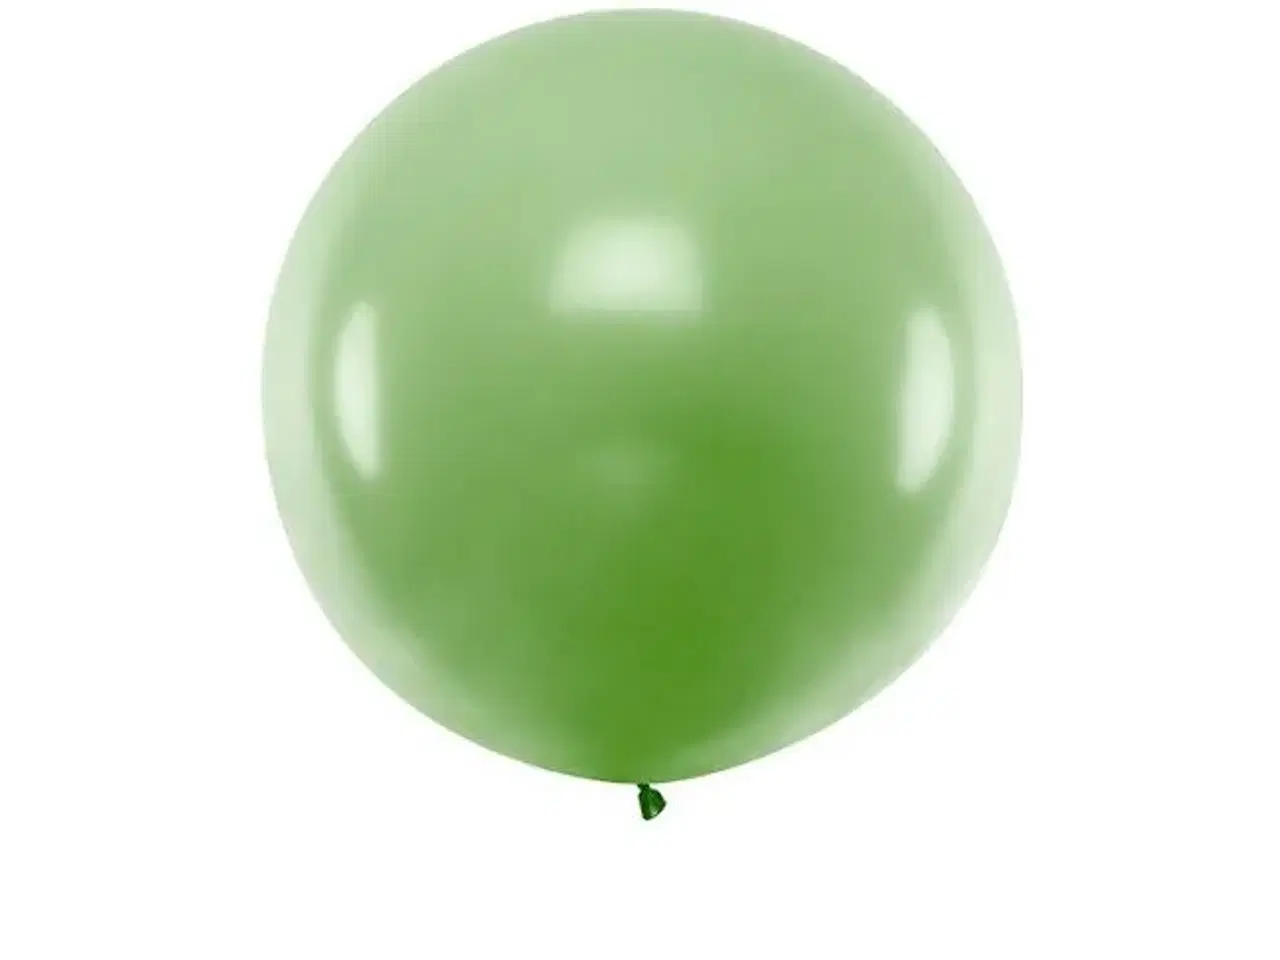 Billede 3 - 1 stk ny kæmpe 1meters grøn ballon